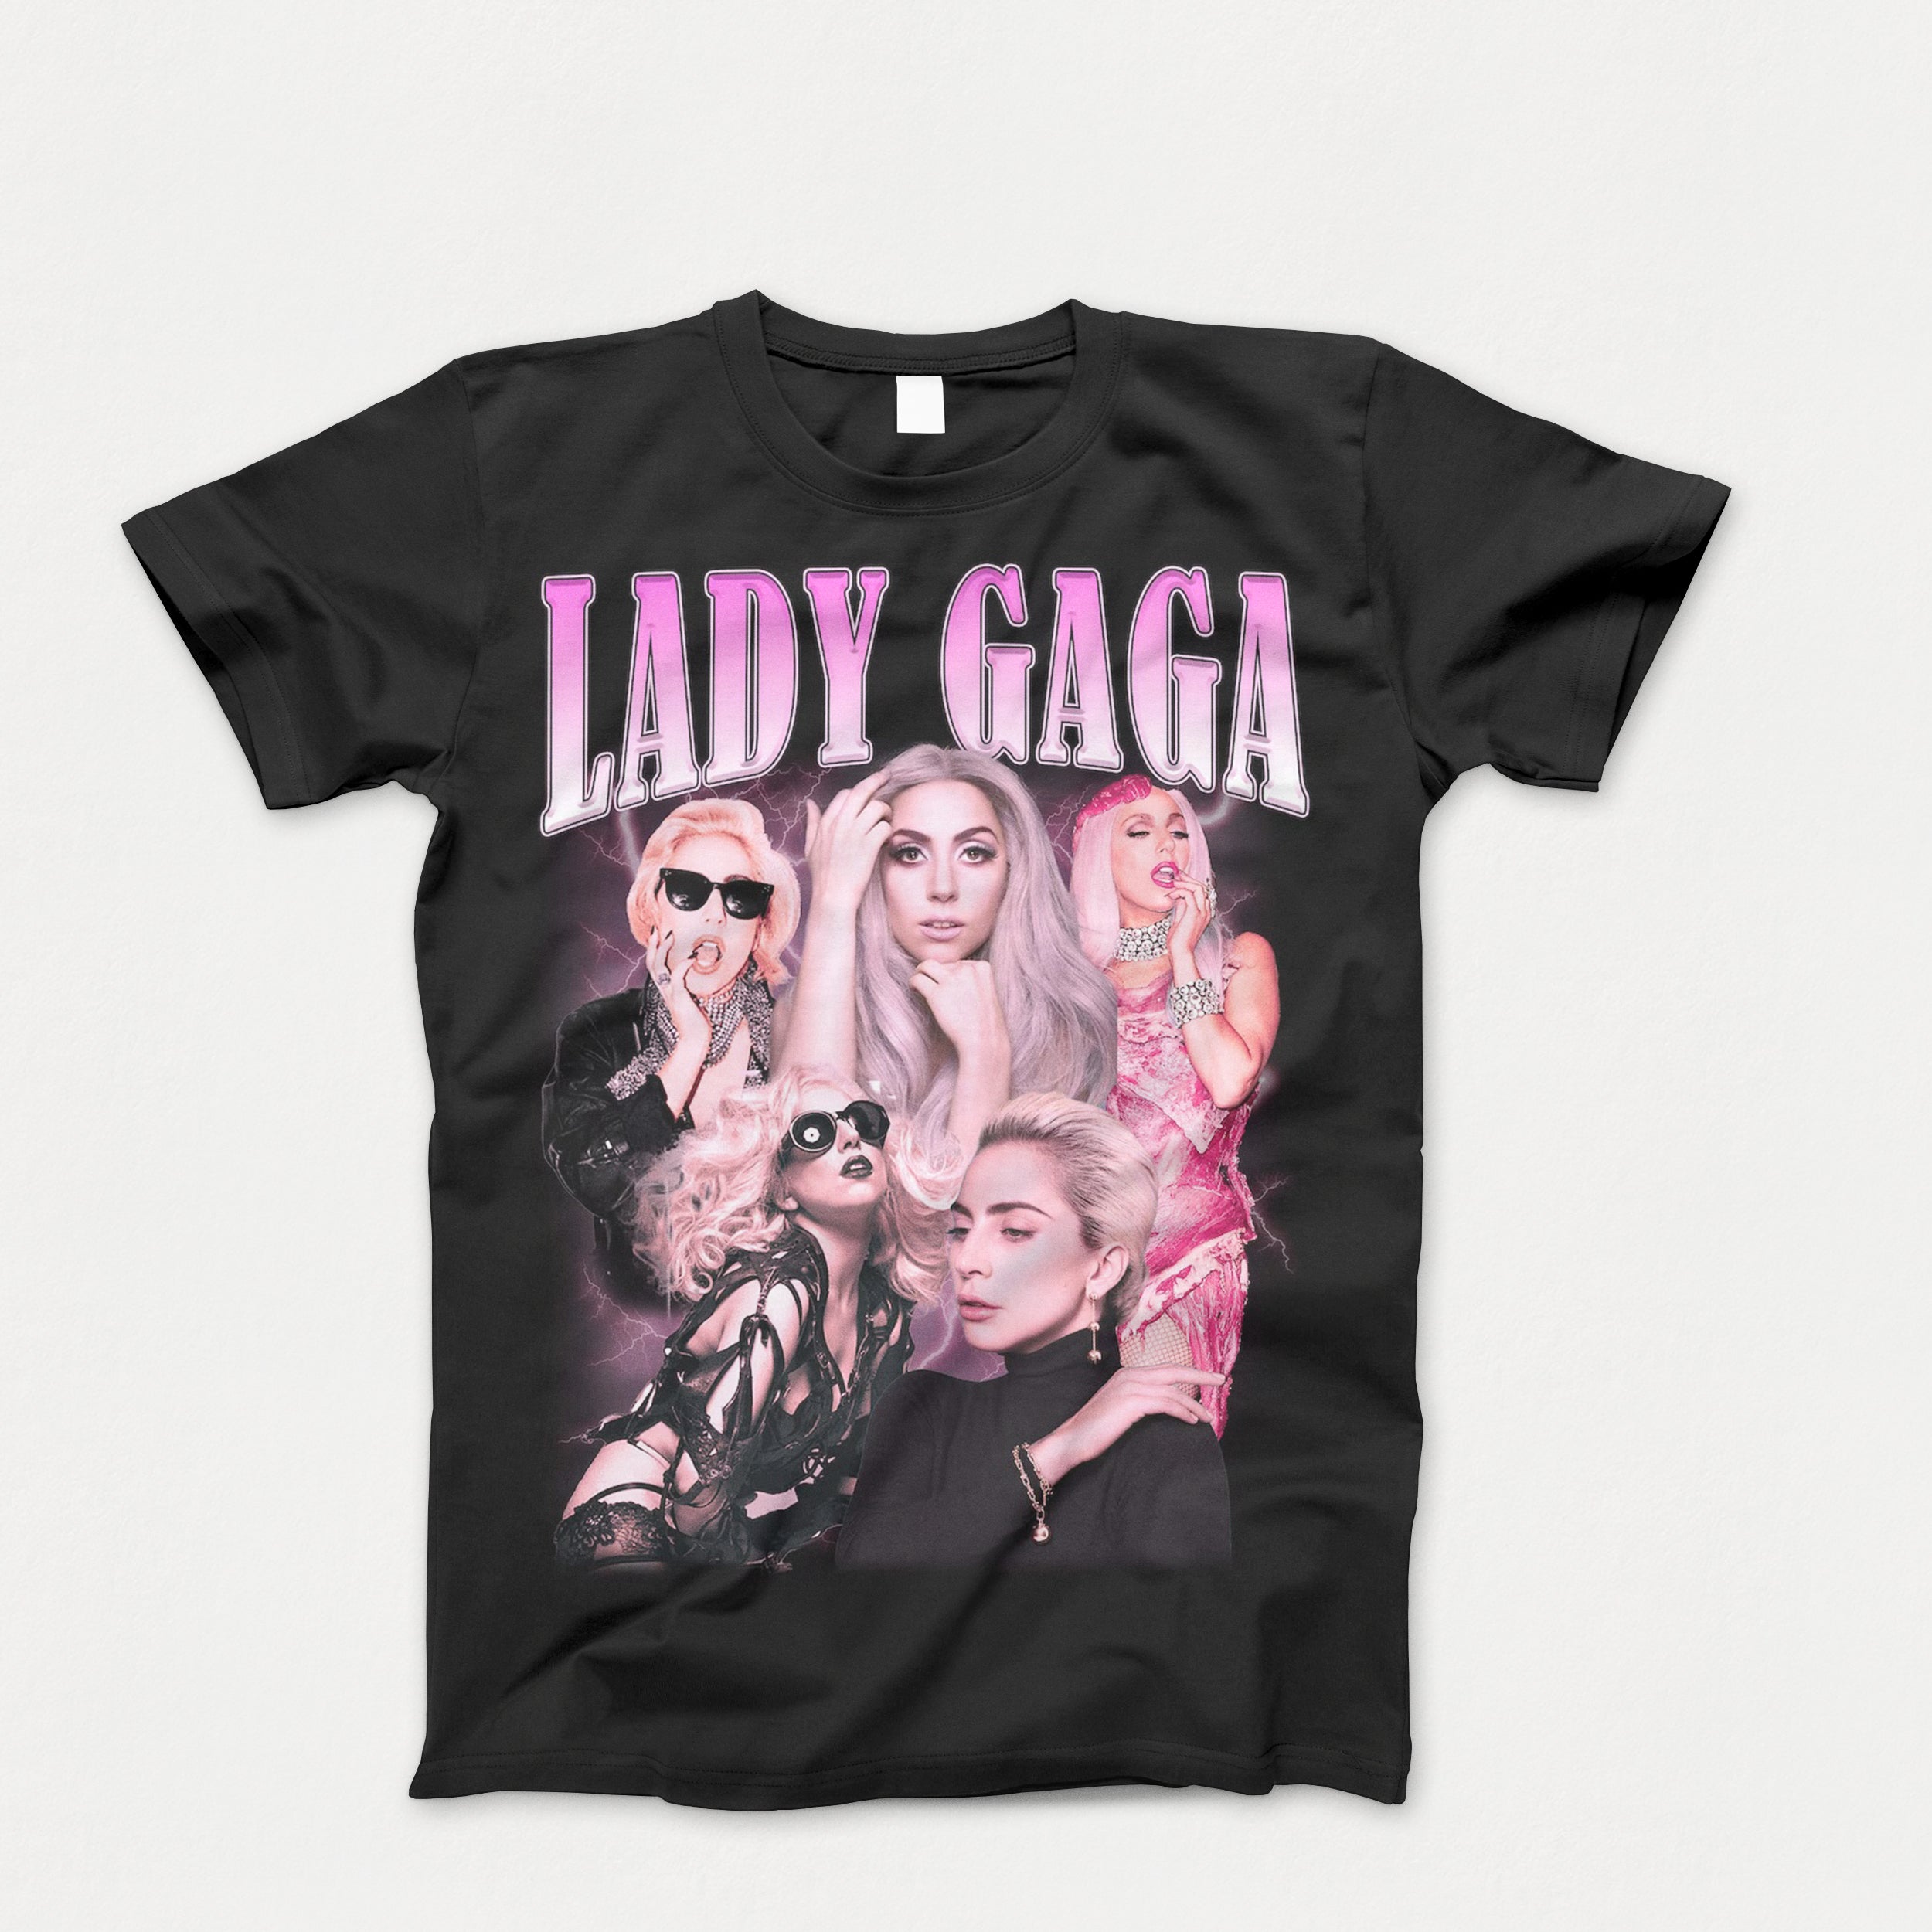 Unisex Adult Lady Gaga Tee Shirt